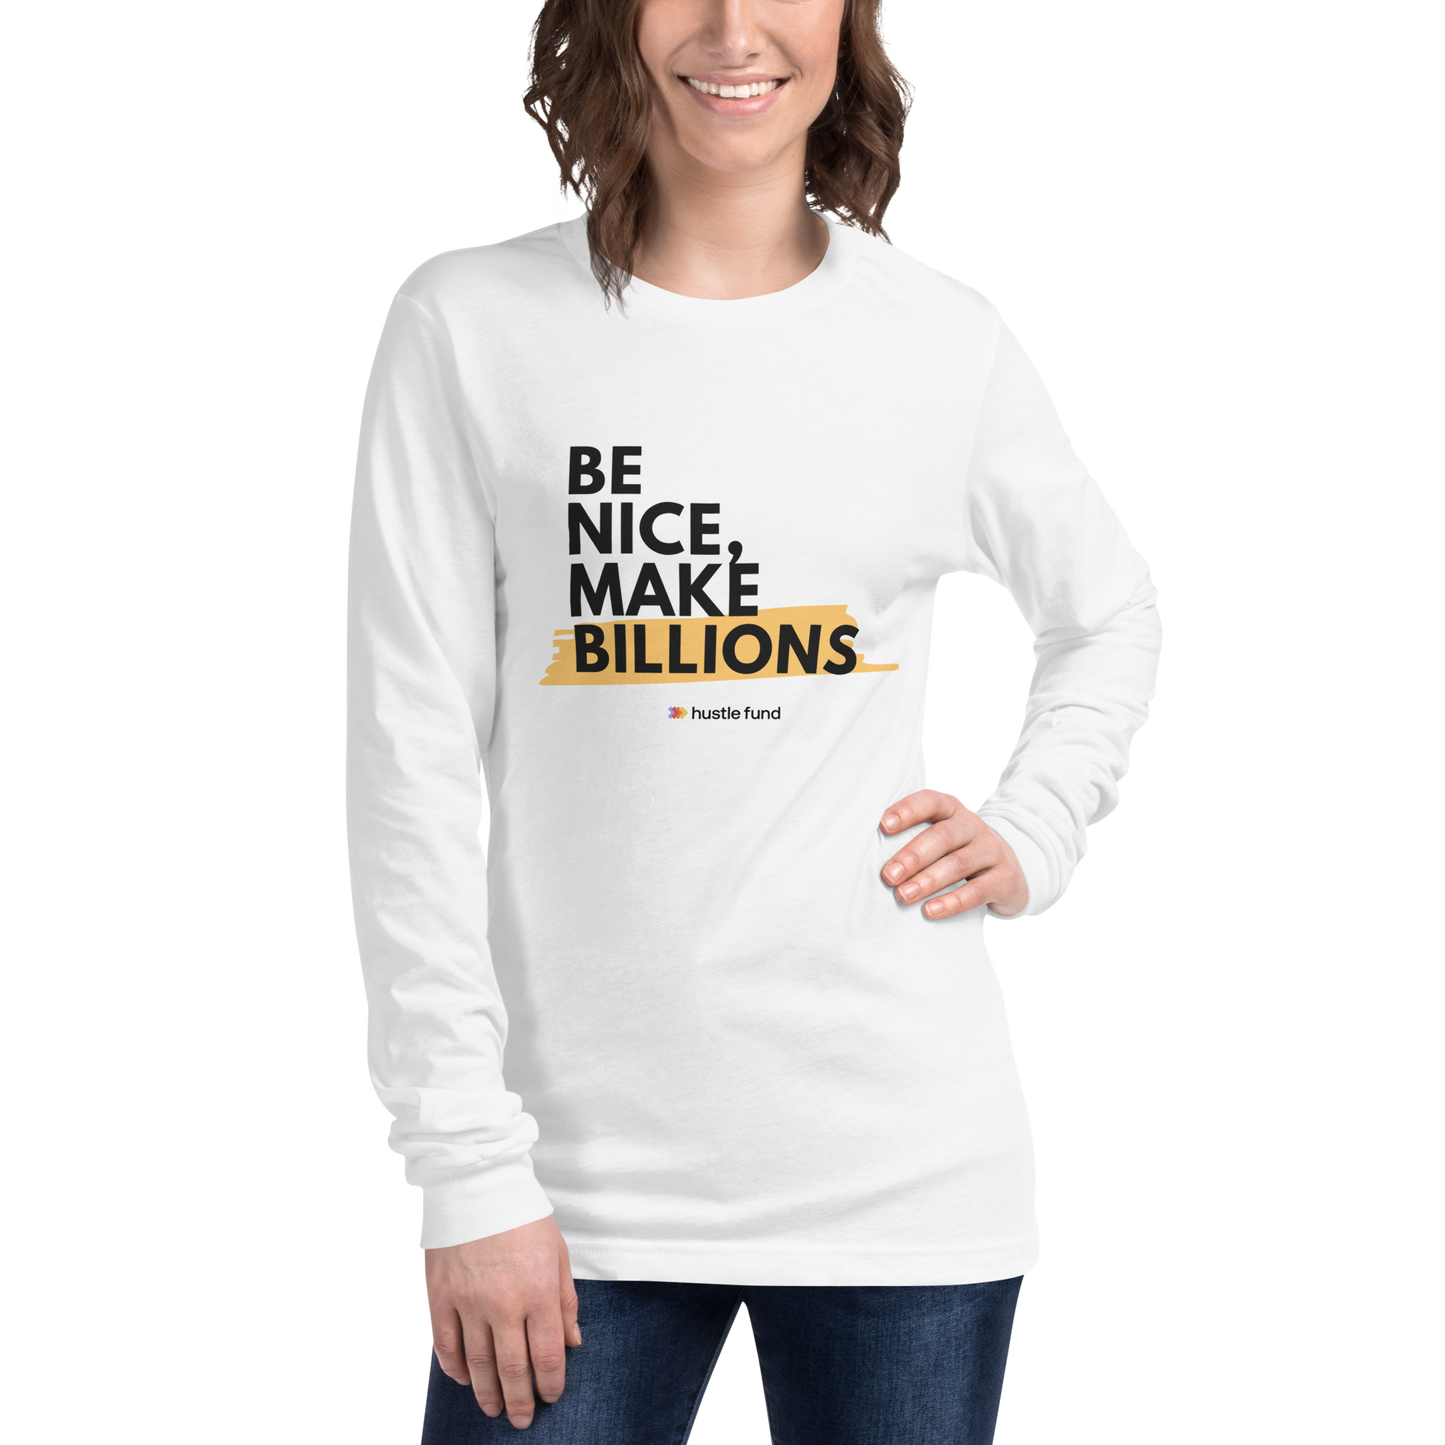 Be Nice, Make Billions Unisex Long Sleeve Shirt